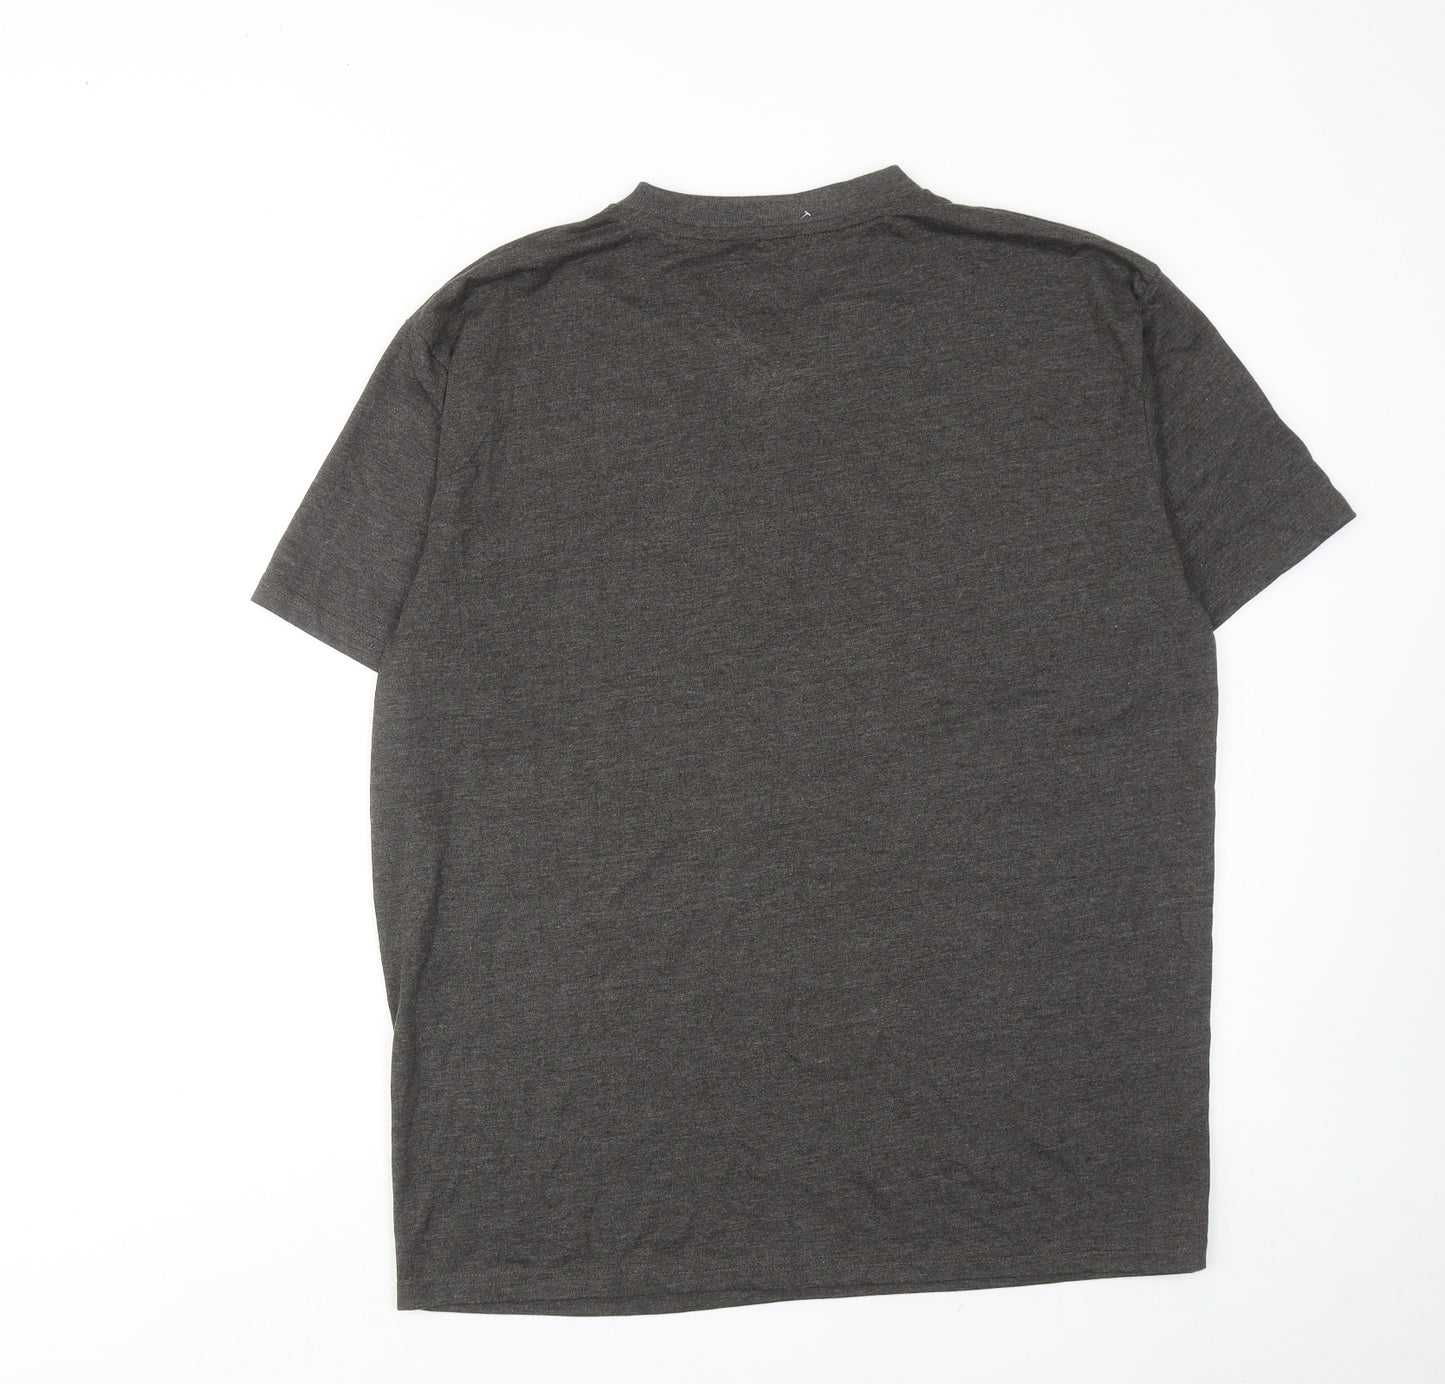 FTS Mens Grey Polyester T-Shirt Size 2XL V-Neck